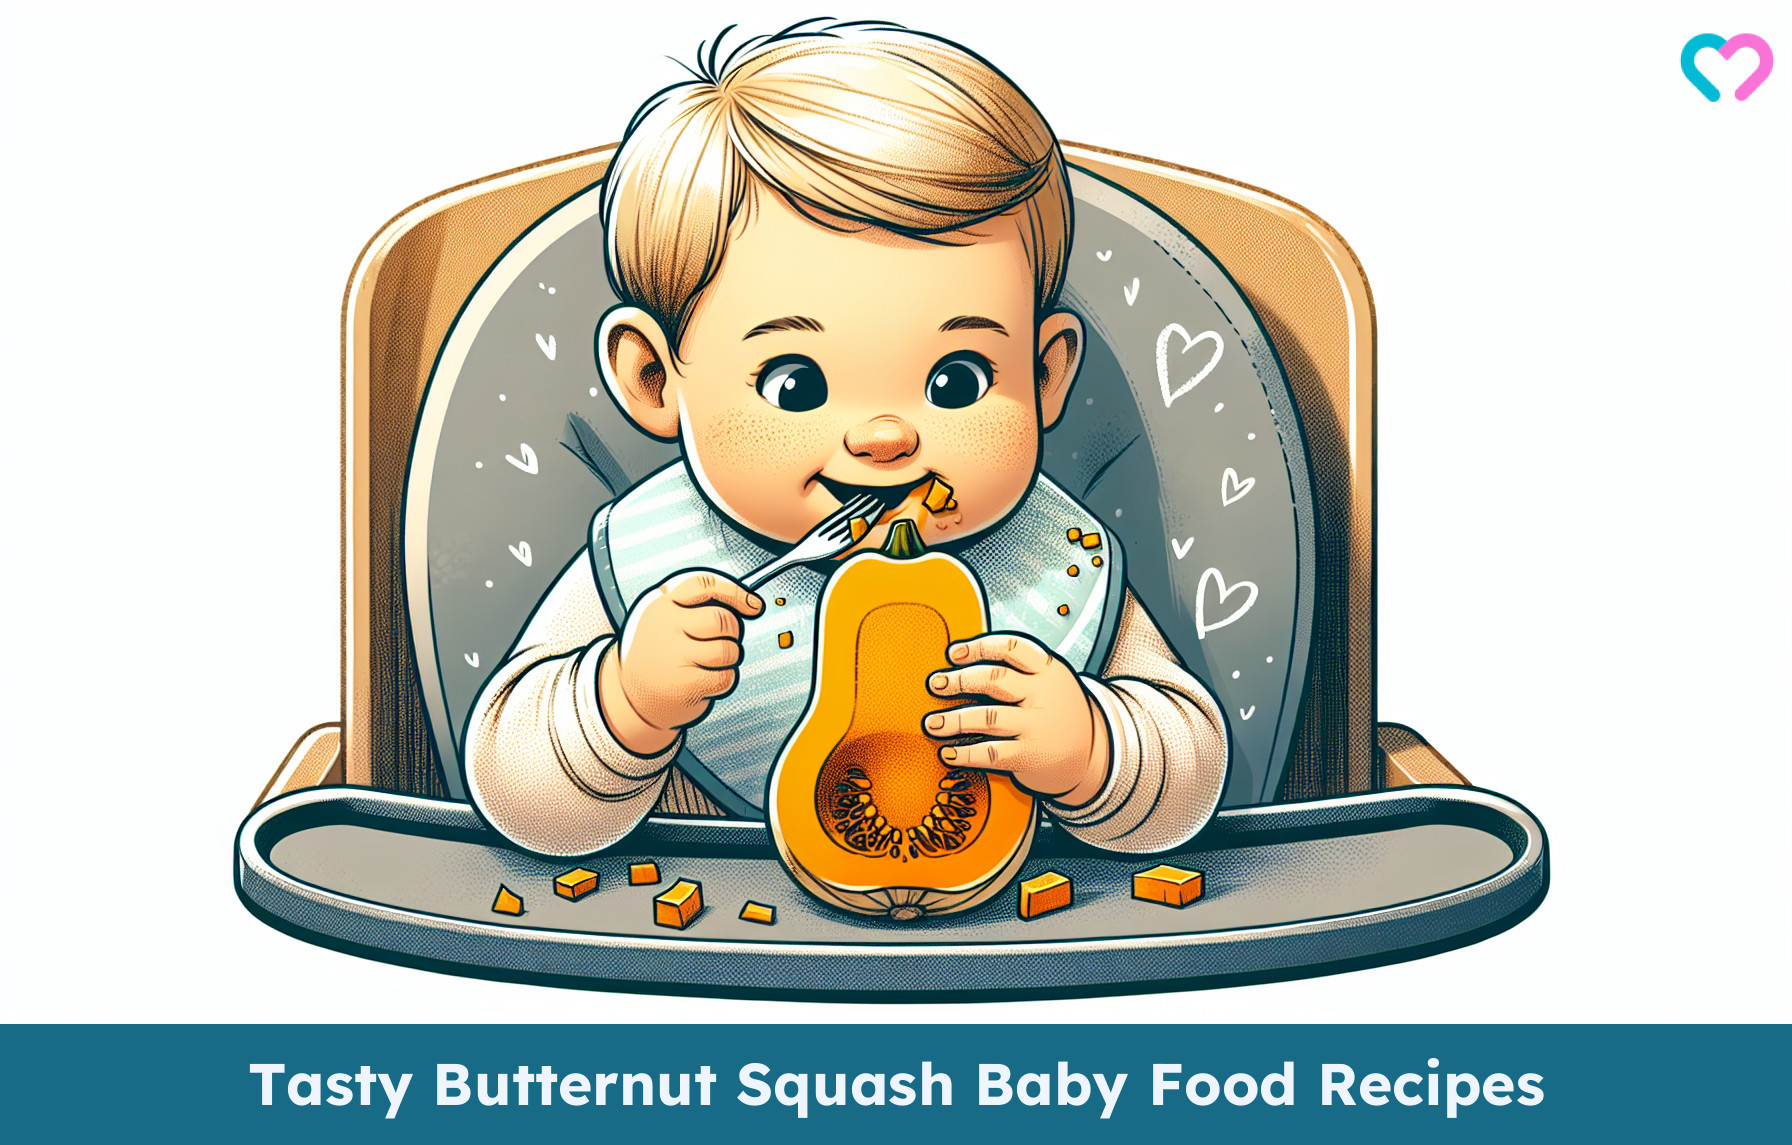 Butternut Squash Baby Food Recipes_illustration